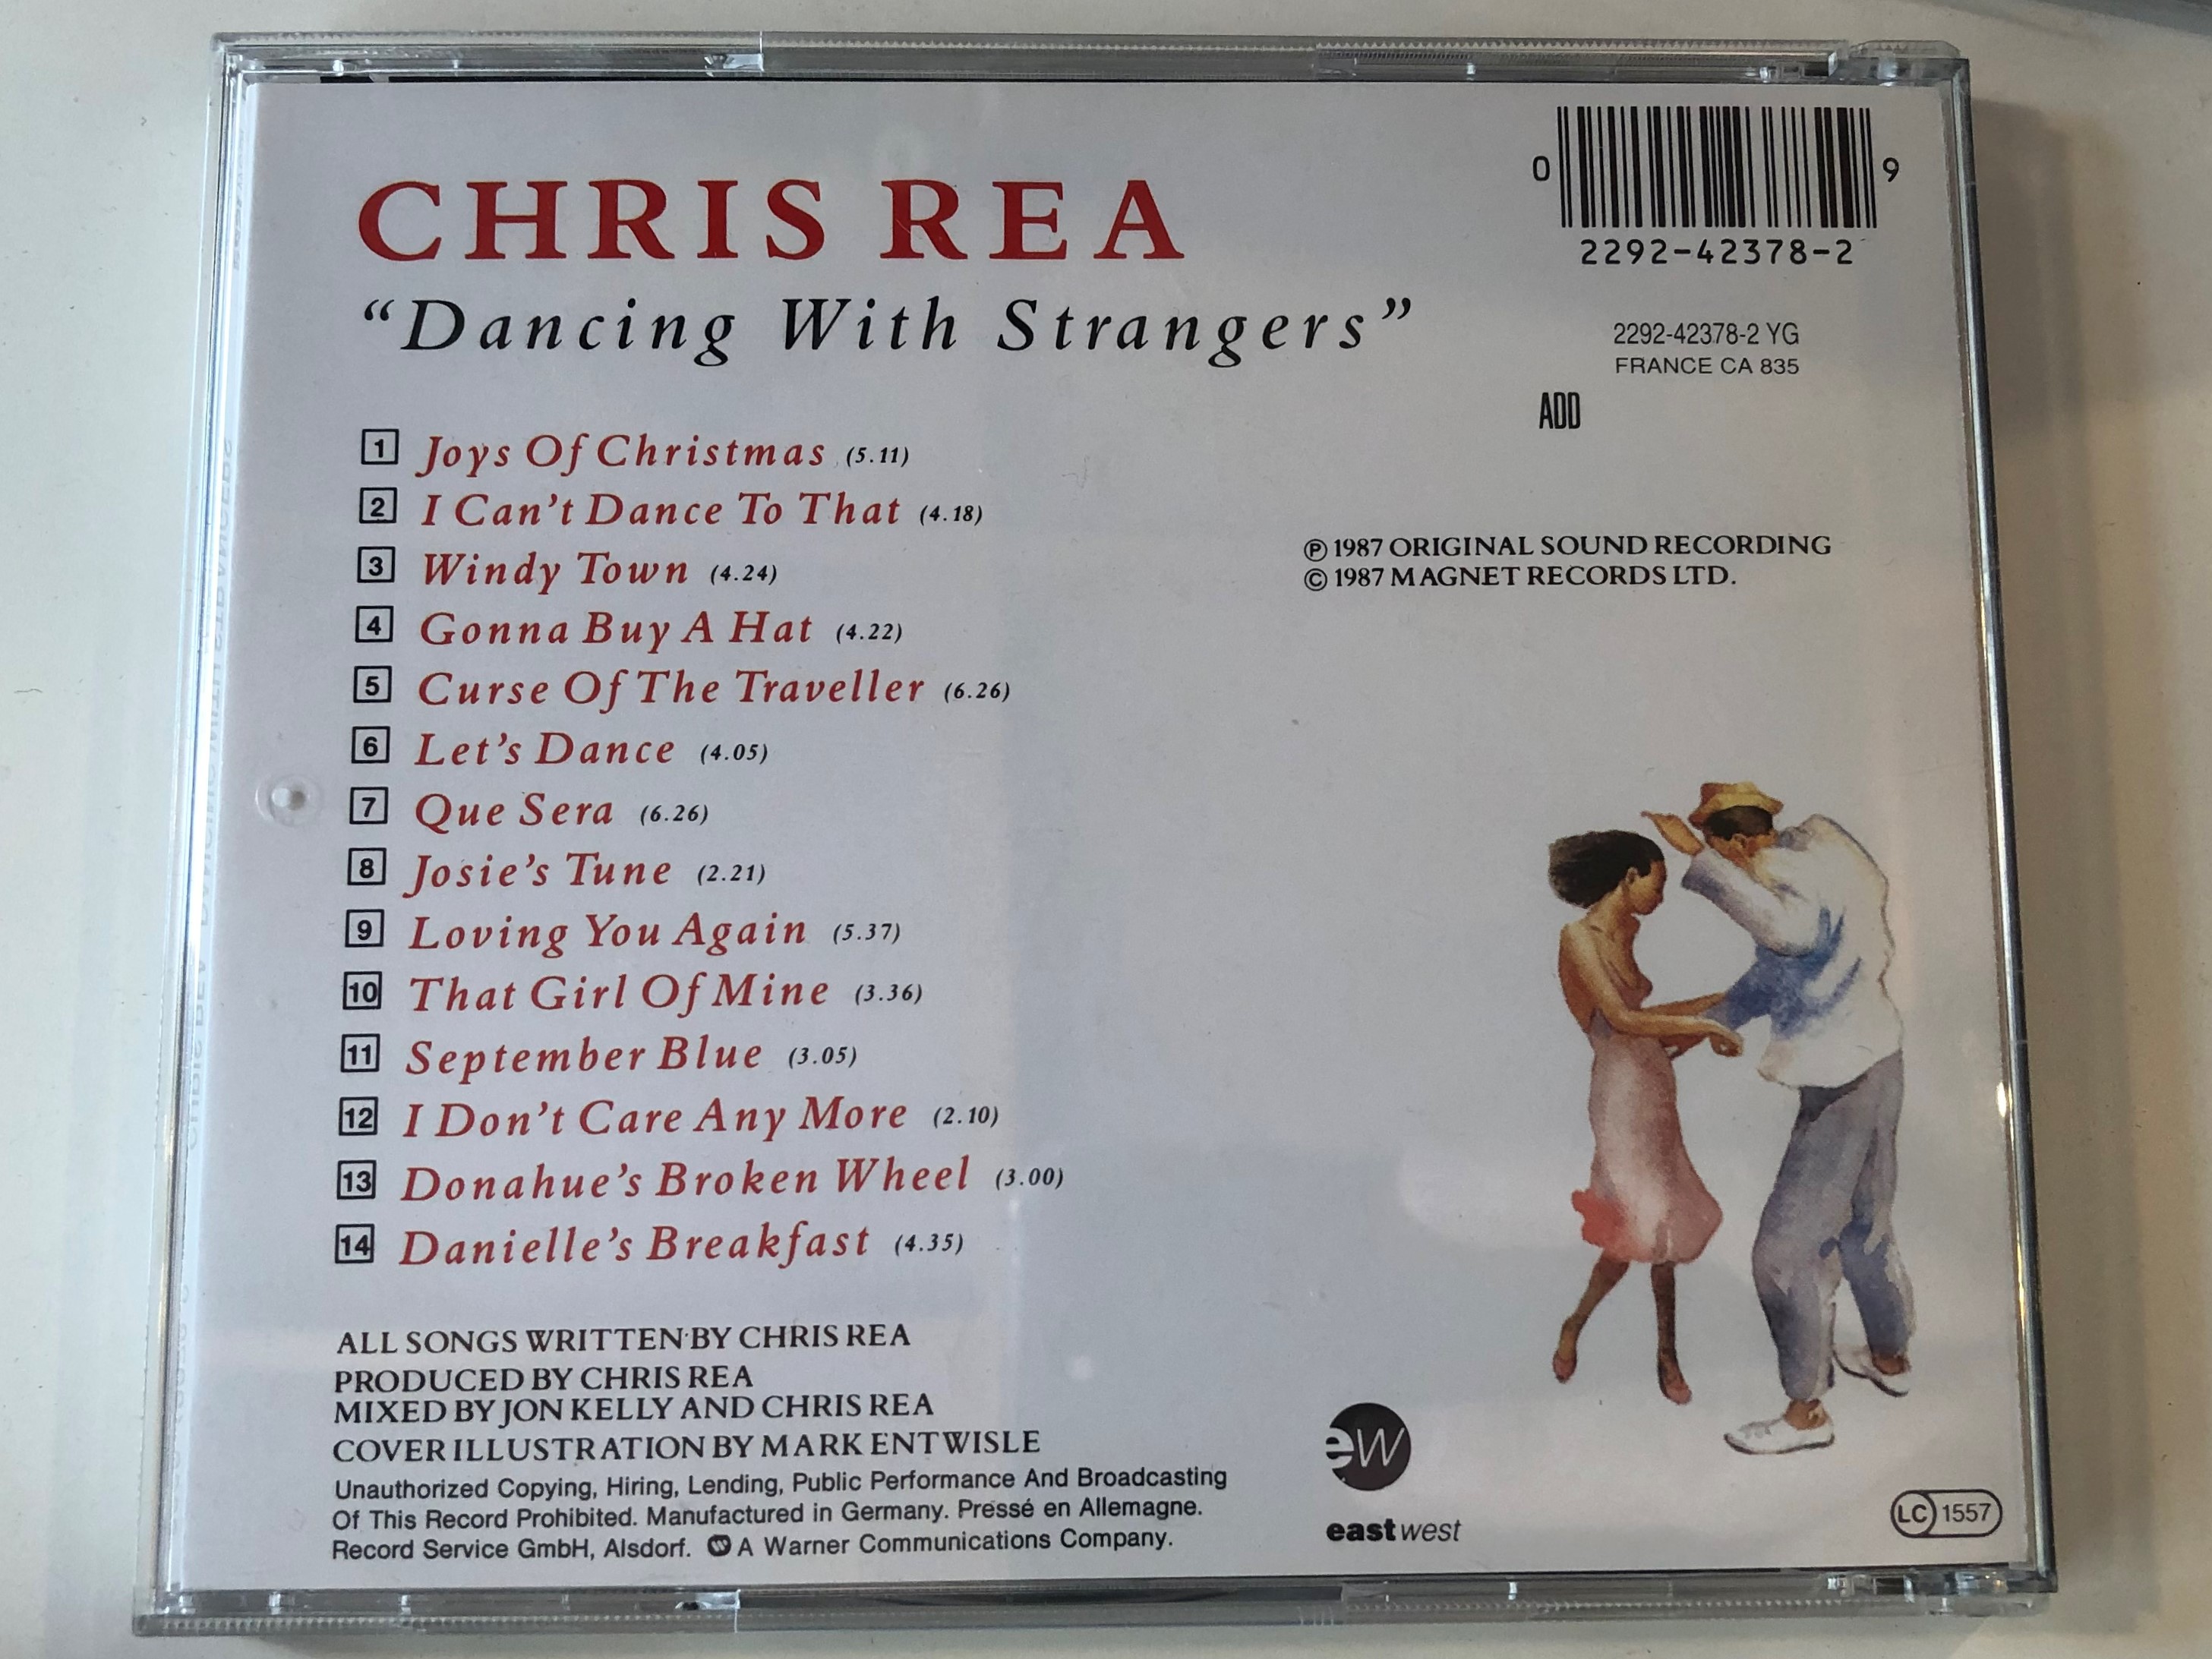 chris-rea-dancing-with-strangers-eastwest-audio-cd-1987-2292-42378-2-2-.jpg